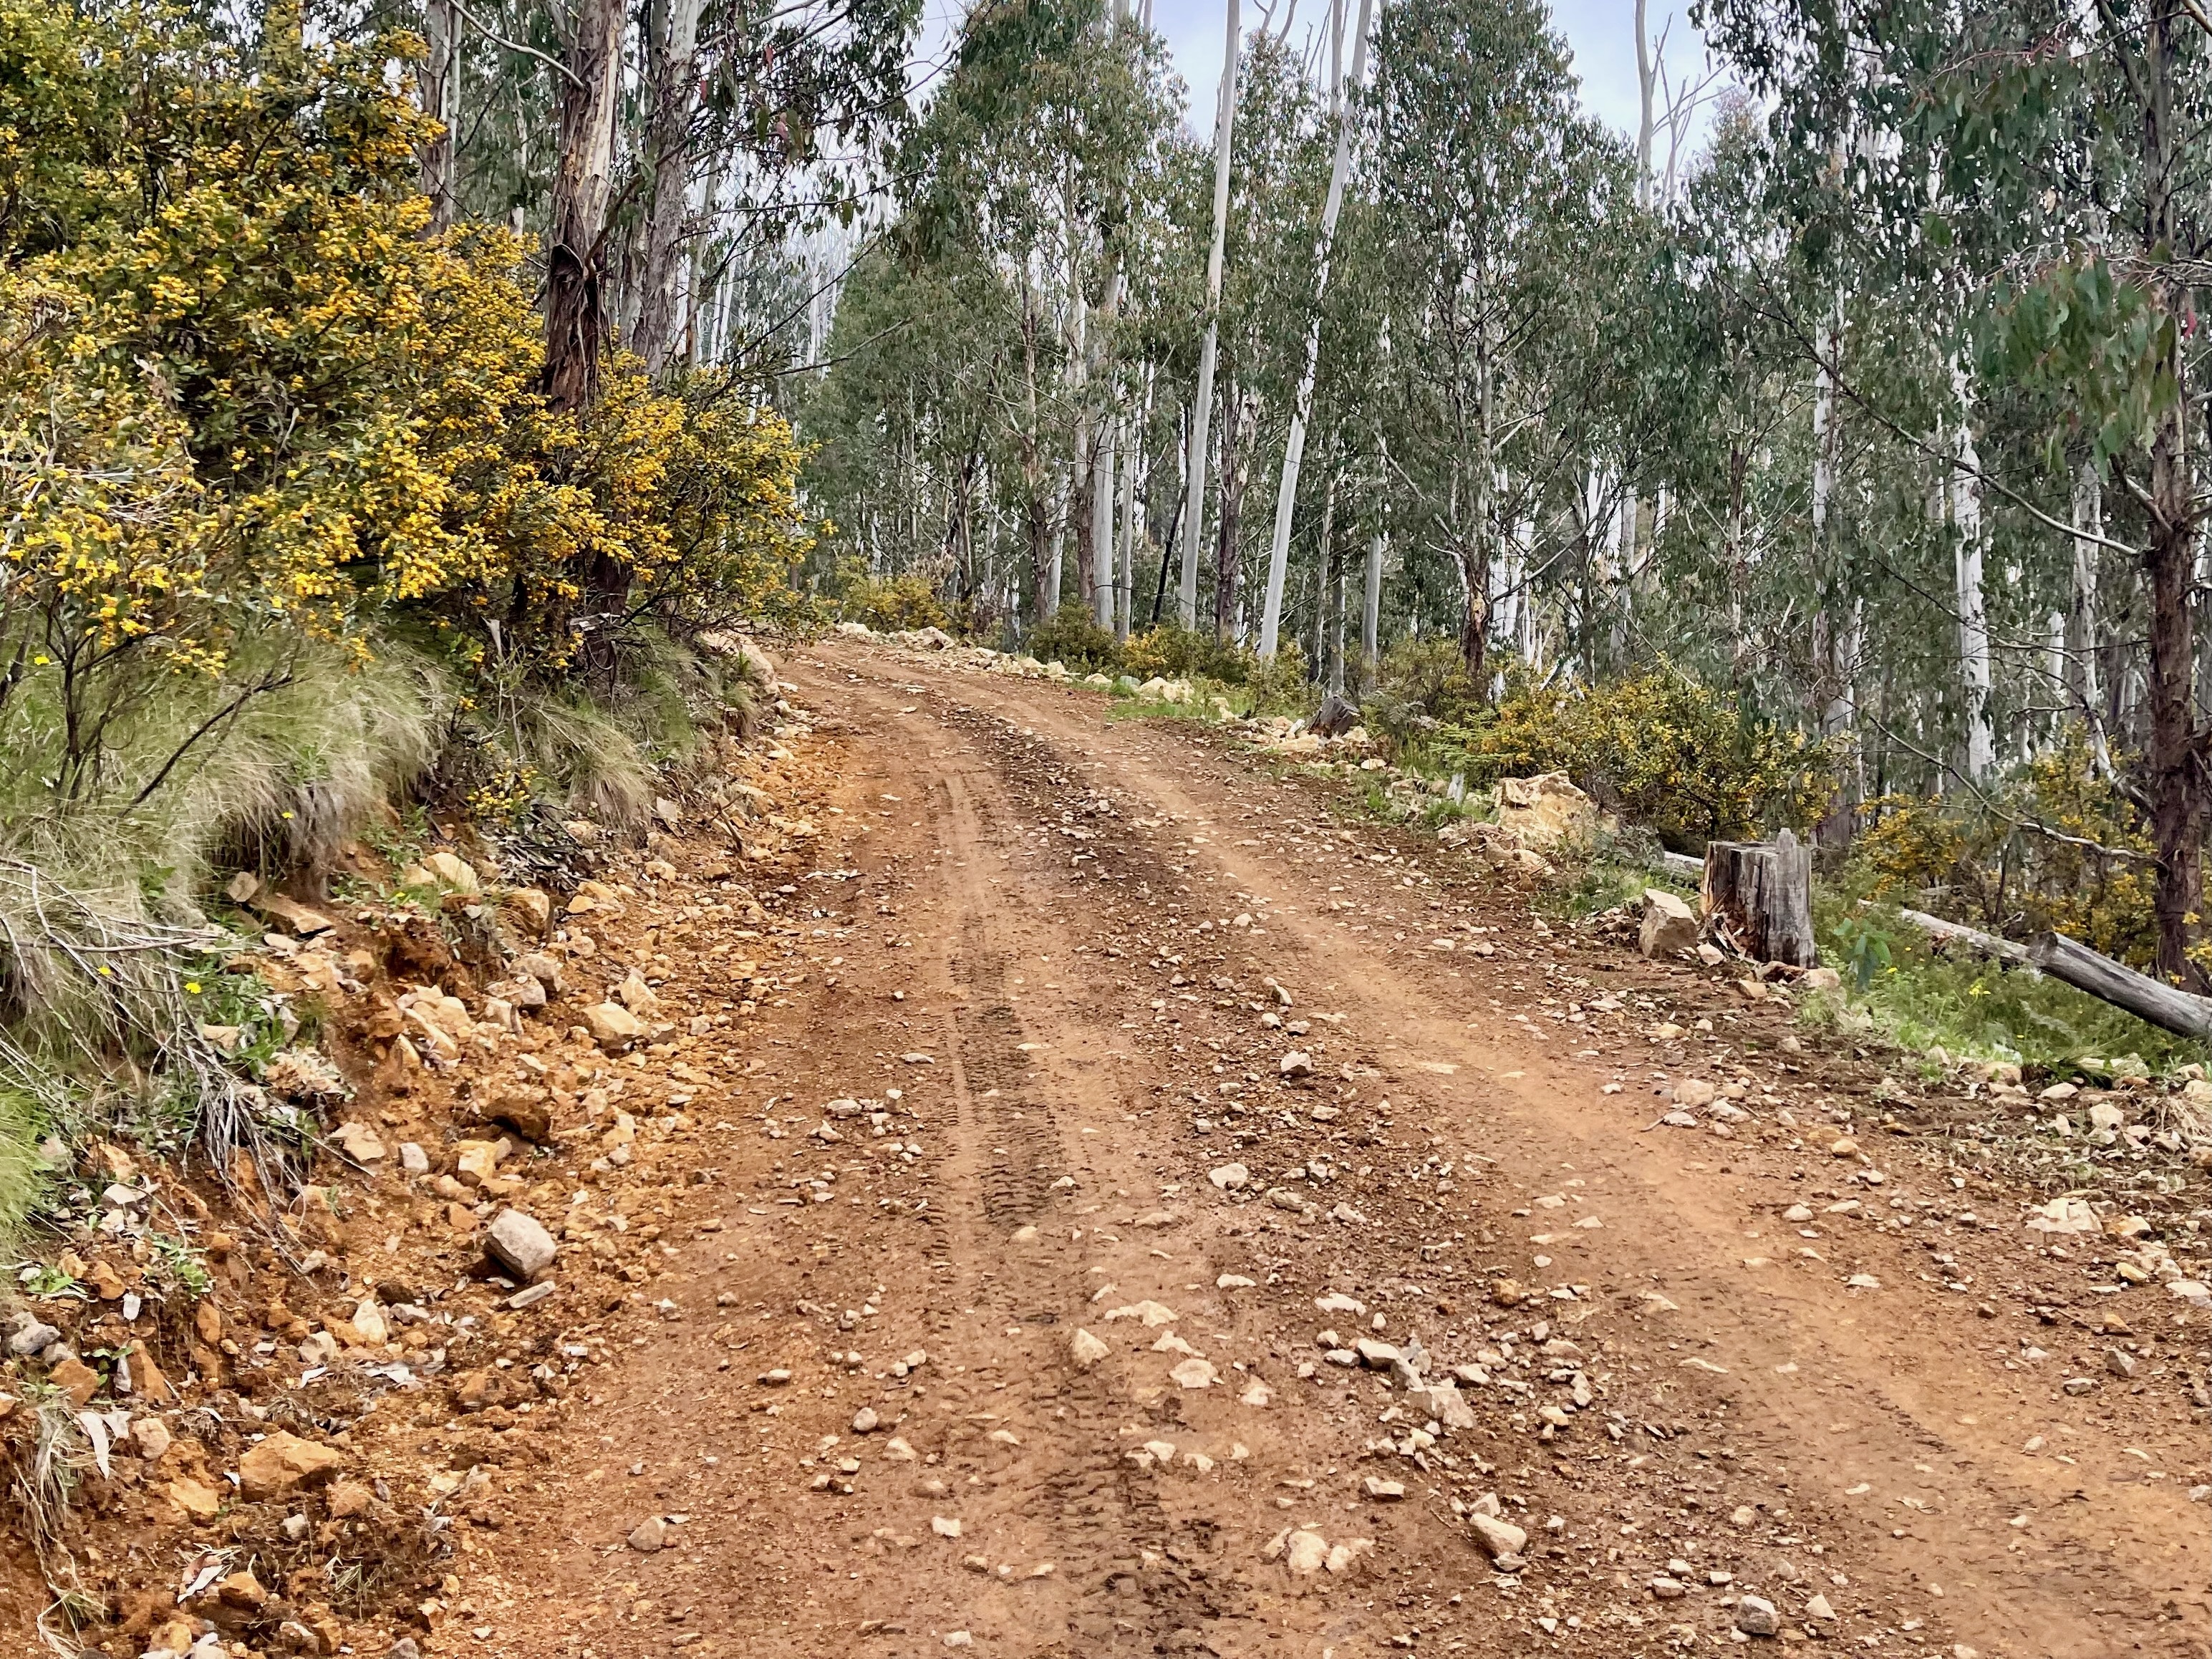 Rough dirt road descending through a native forest